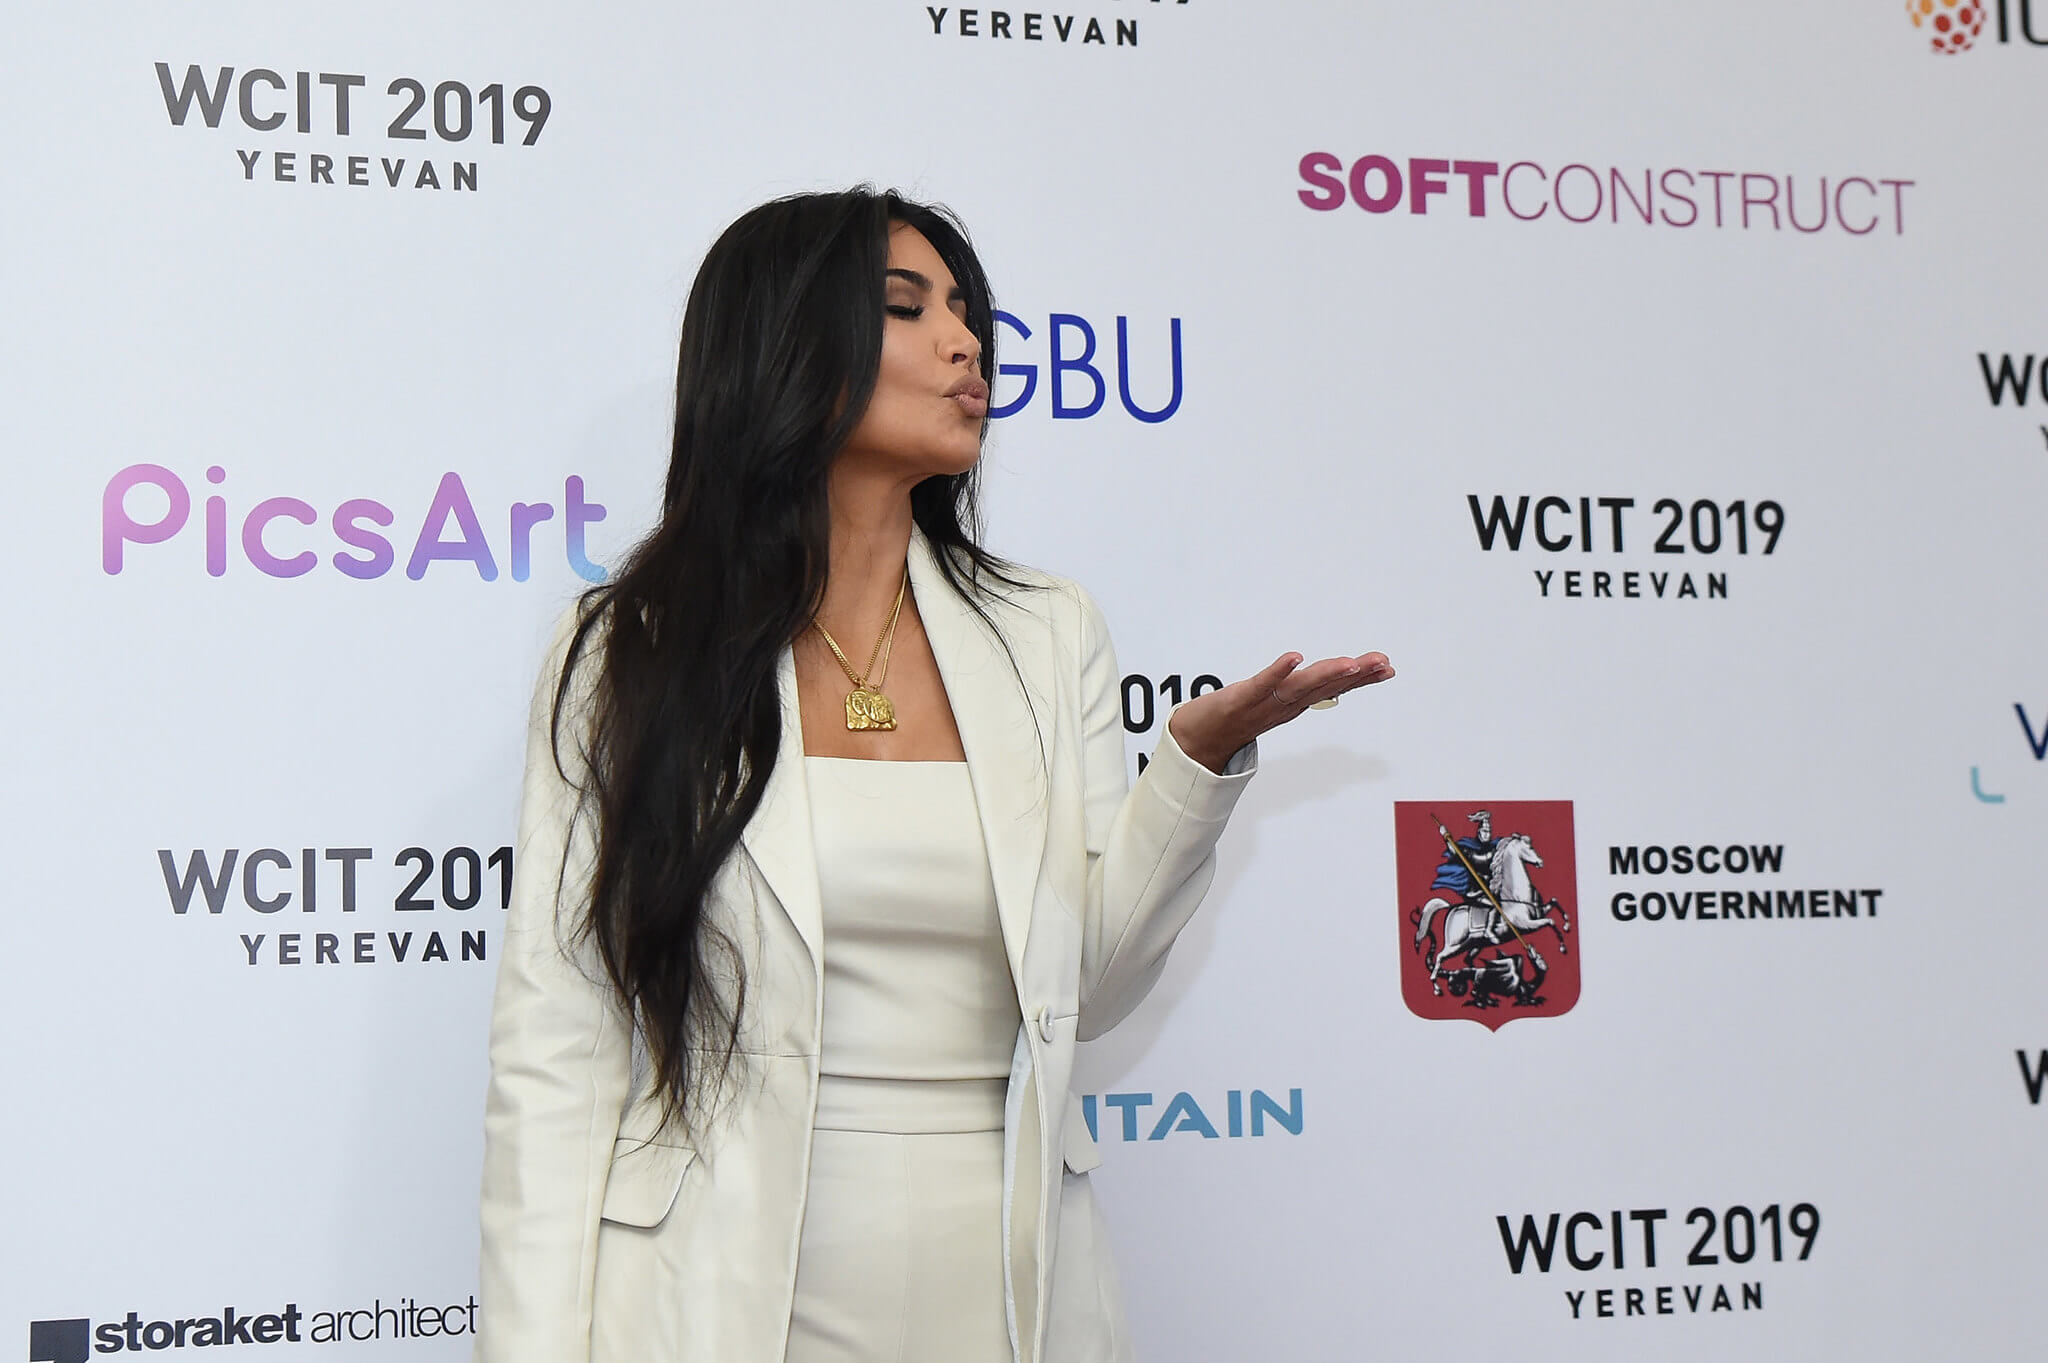 Kim Kardashian arrives at WCIT 2019 Yerevan.